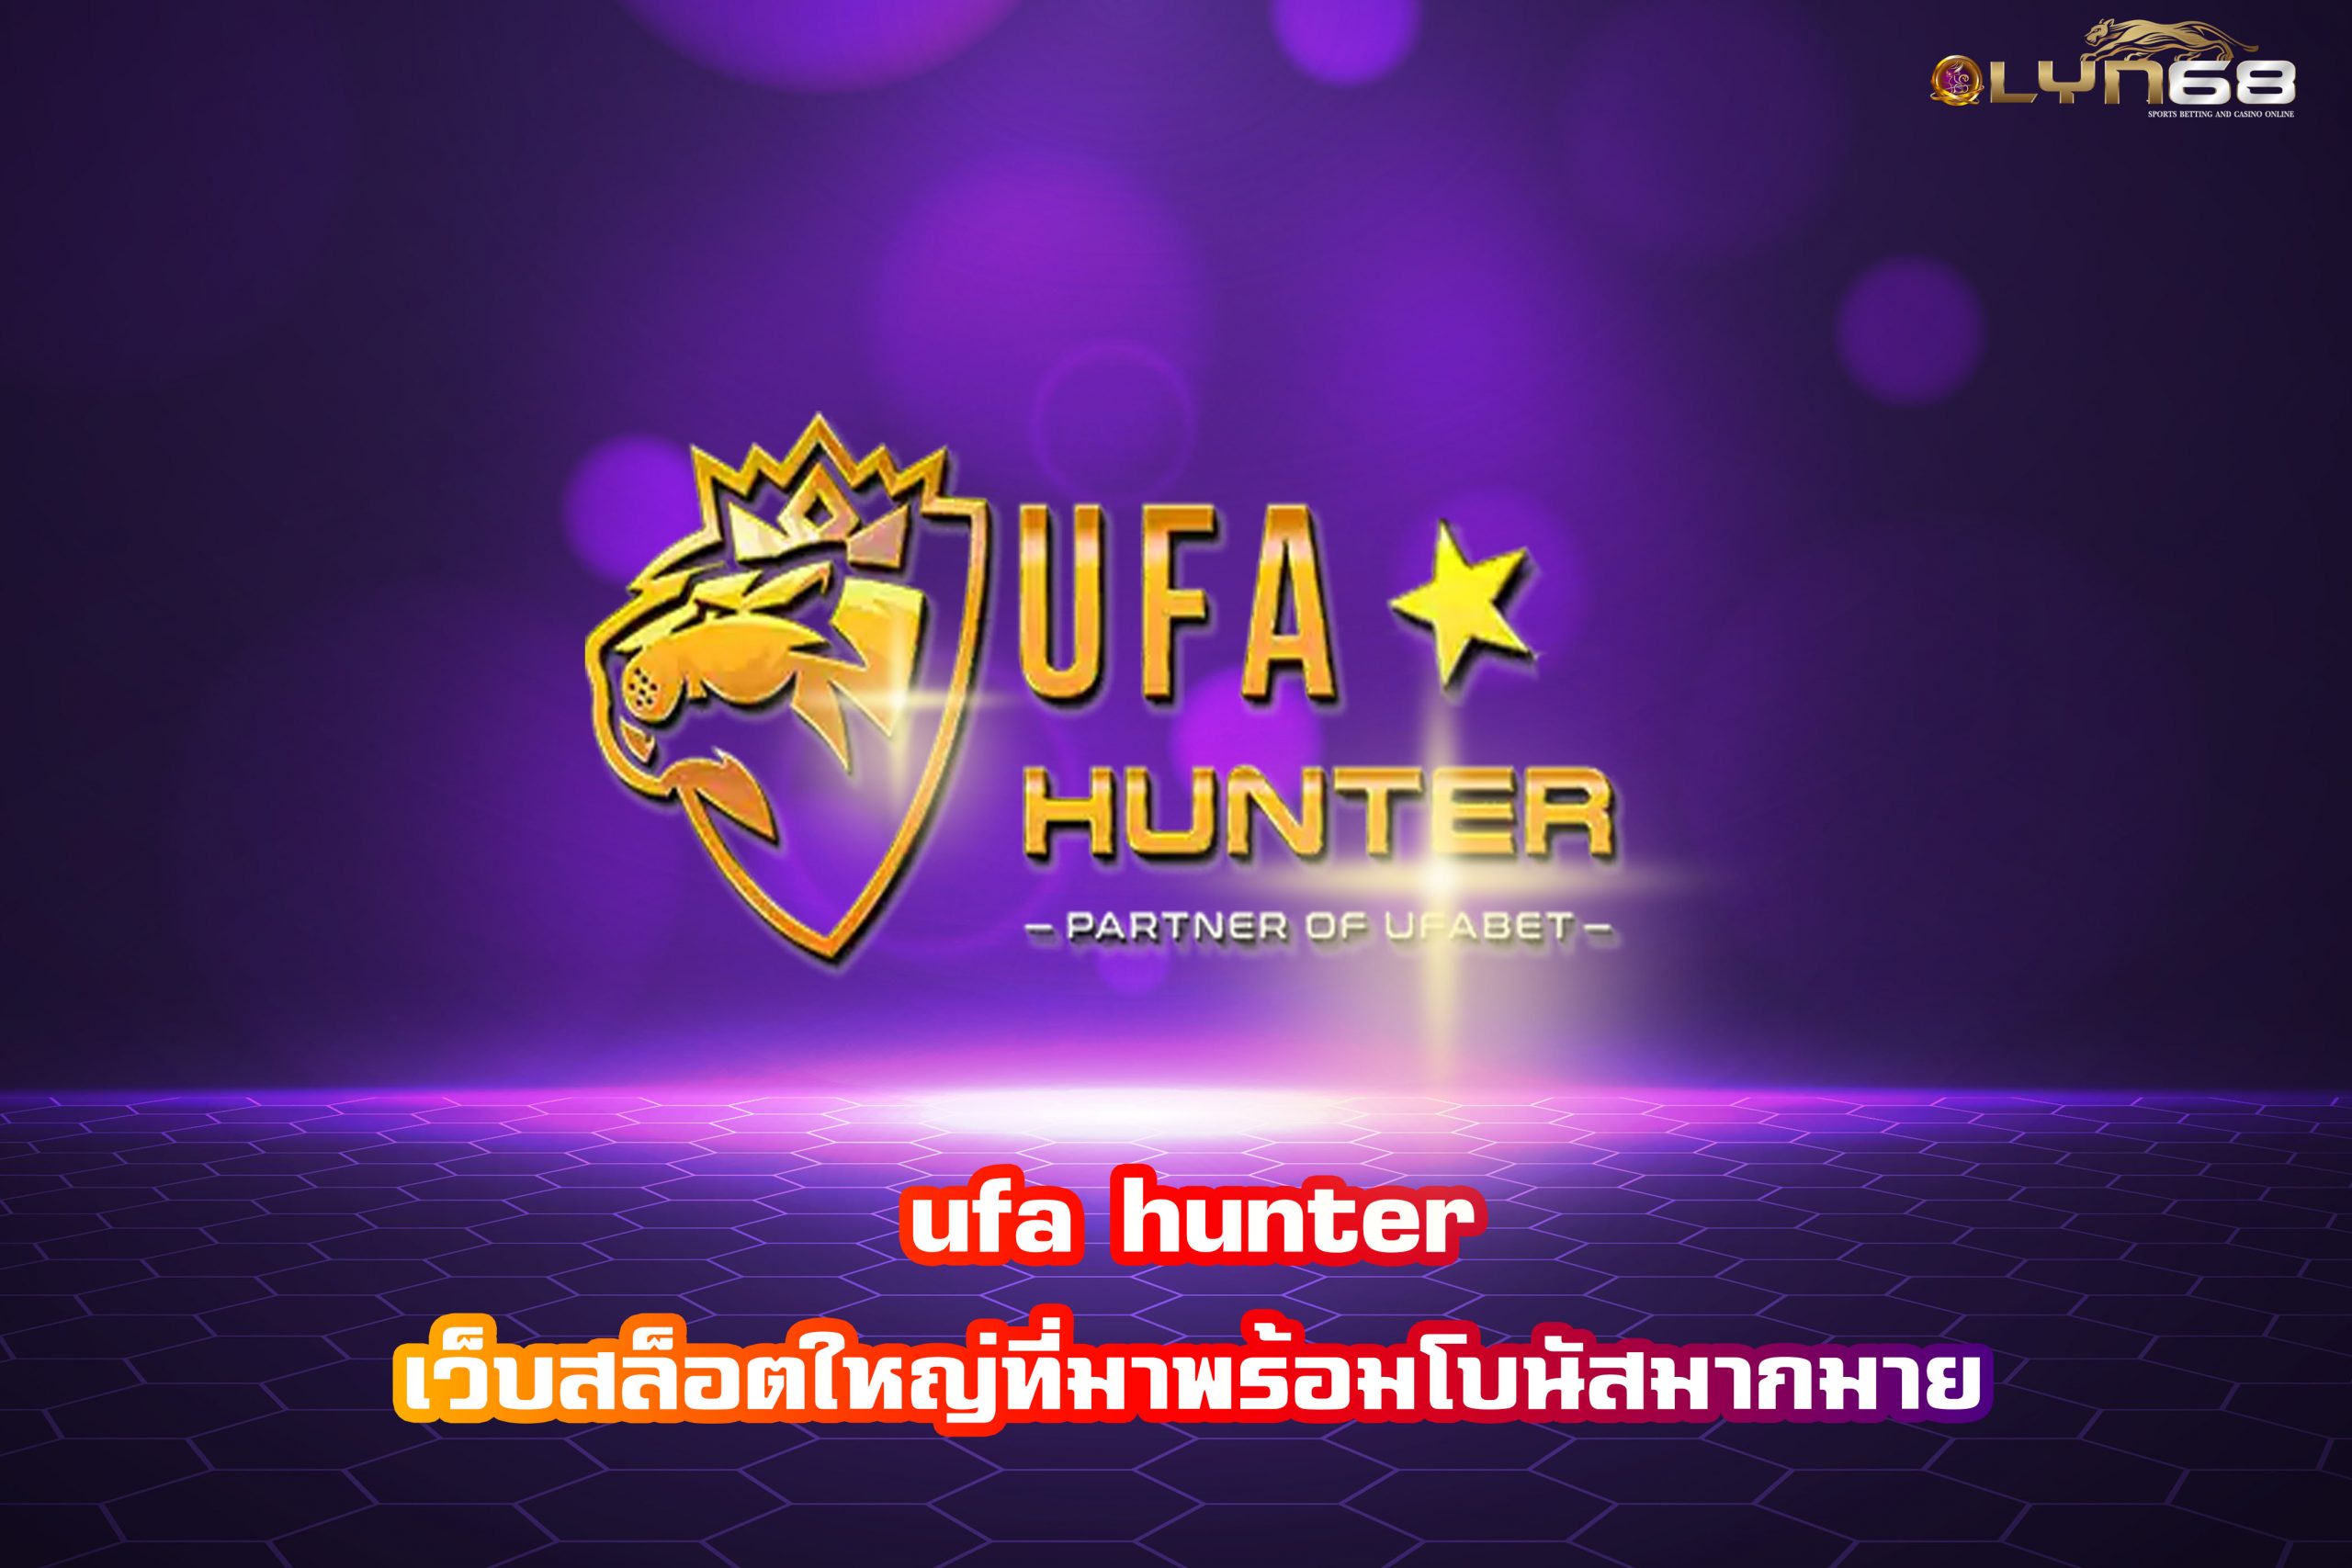 ufa hunter เว็บสล็อตใหญ่ที่มาพร้อมโบนัสมากมาย